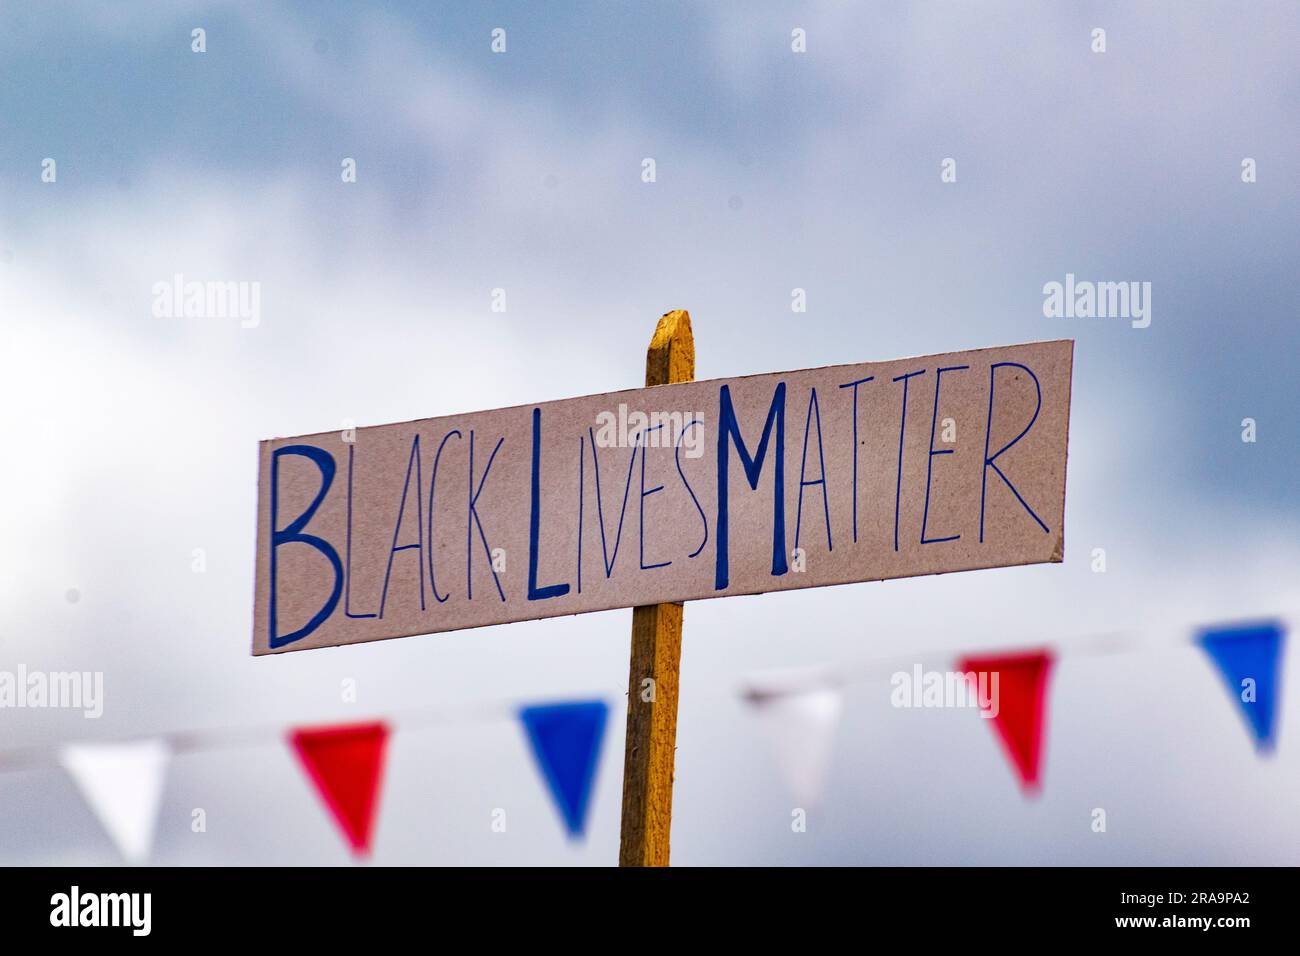 Black Lives Mater Protest Truro, Cornwall 2020 Banque D'Images